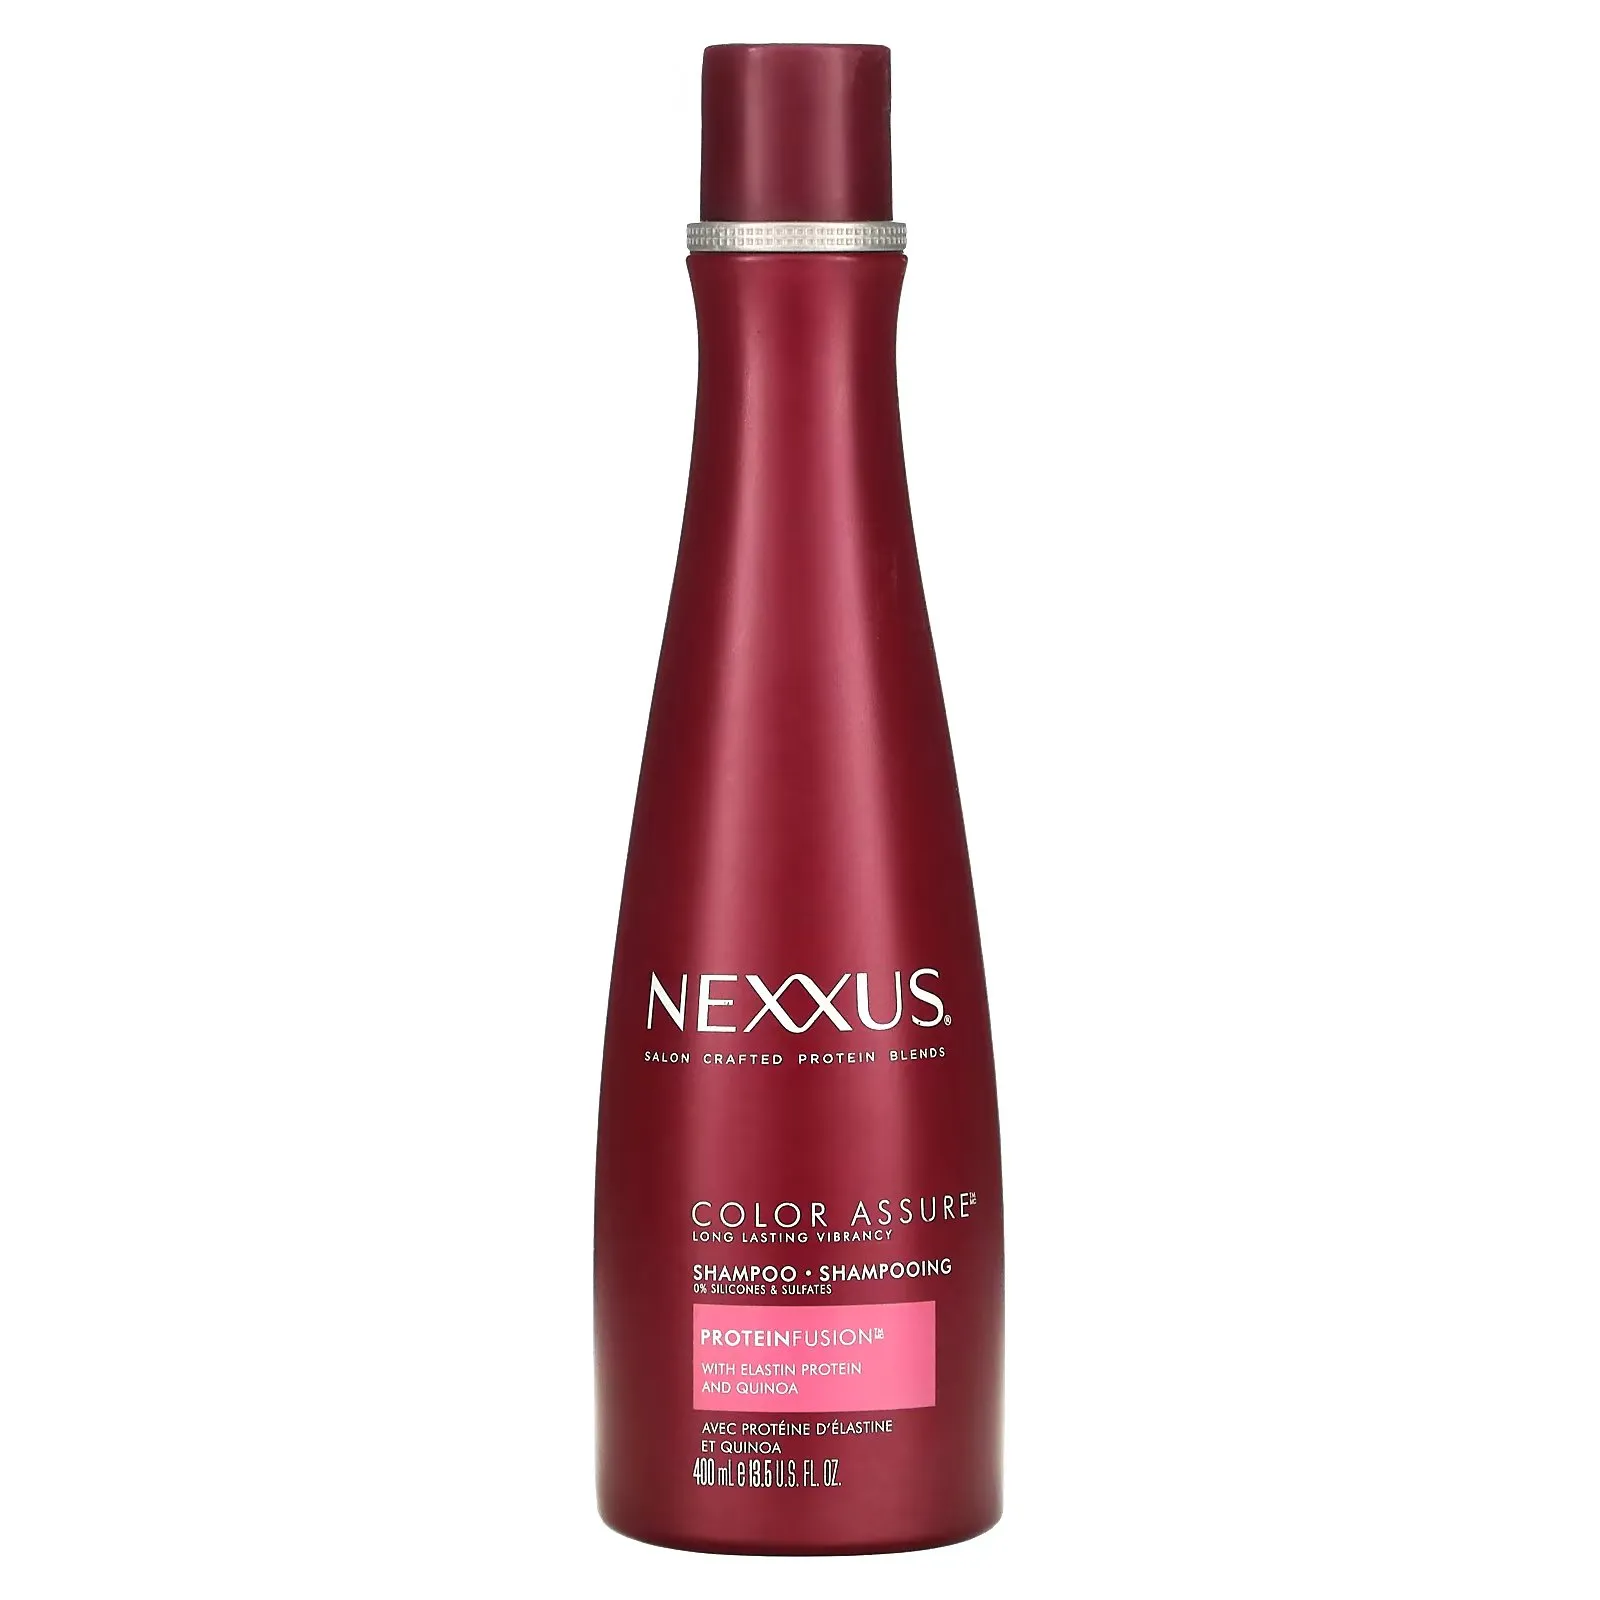 A tied FEMMENORDIC's choice in the Nexxus vs Biolage comparison, Nexxus Color Assure Shampoo